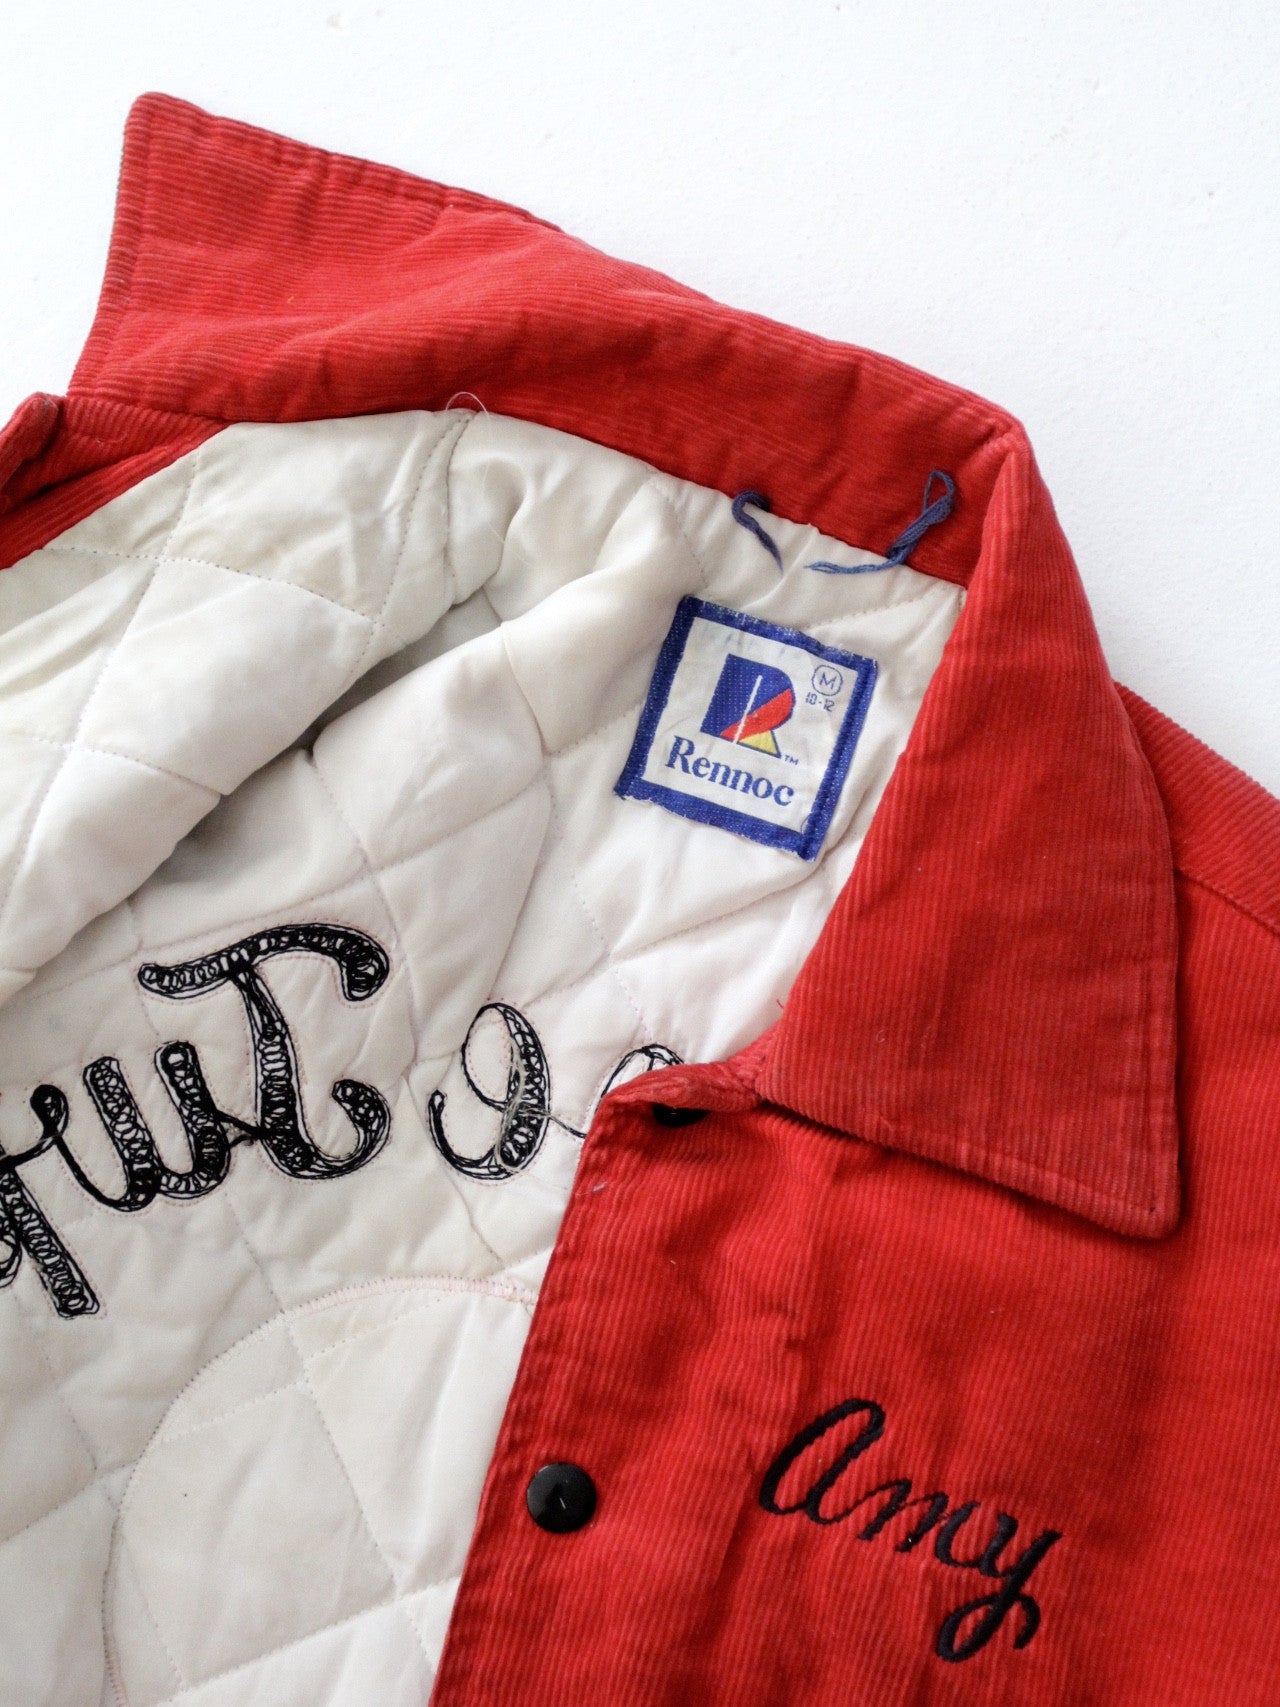 Vintage 80s Varsity Soccer Jacket, Size Medium